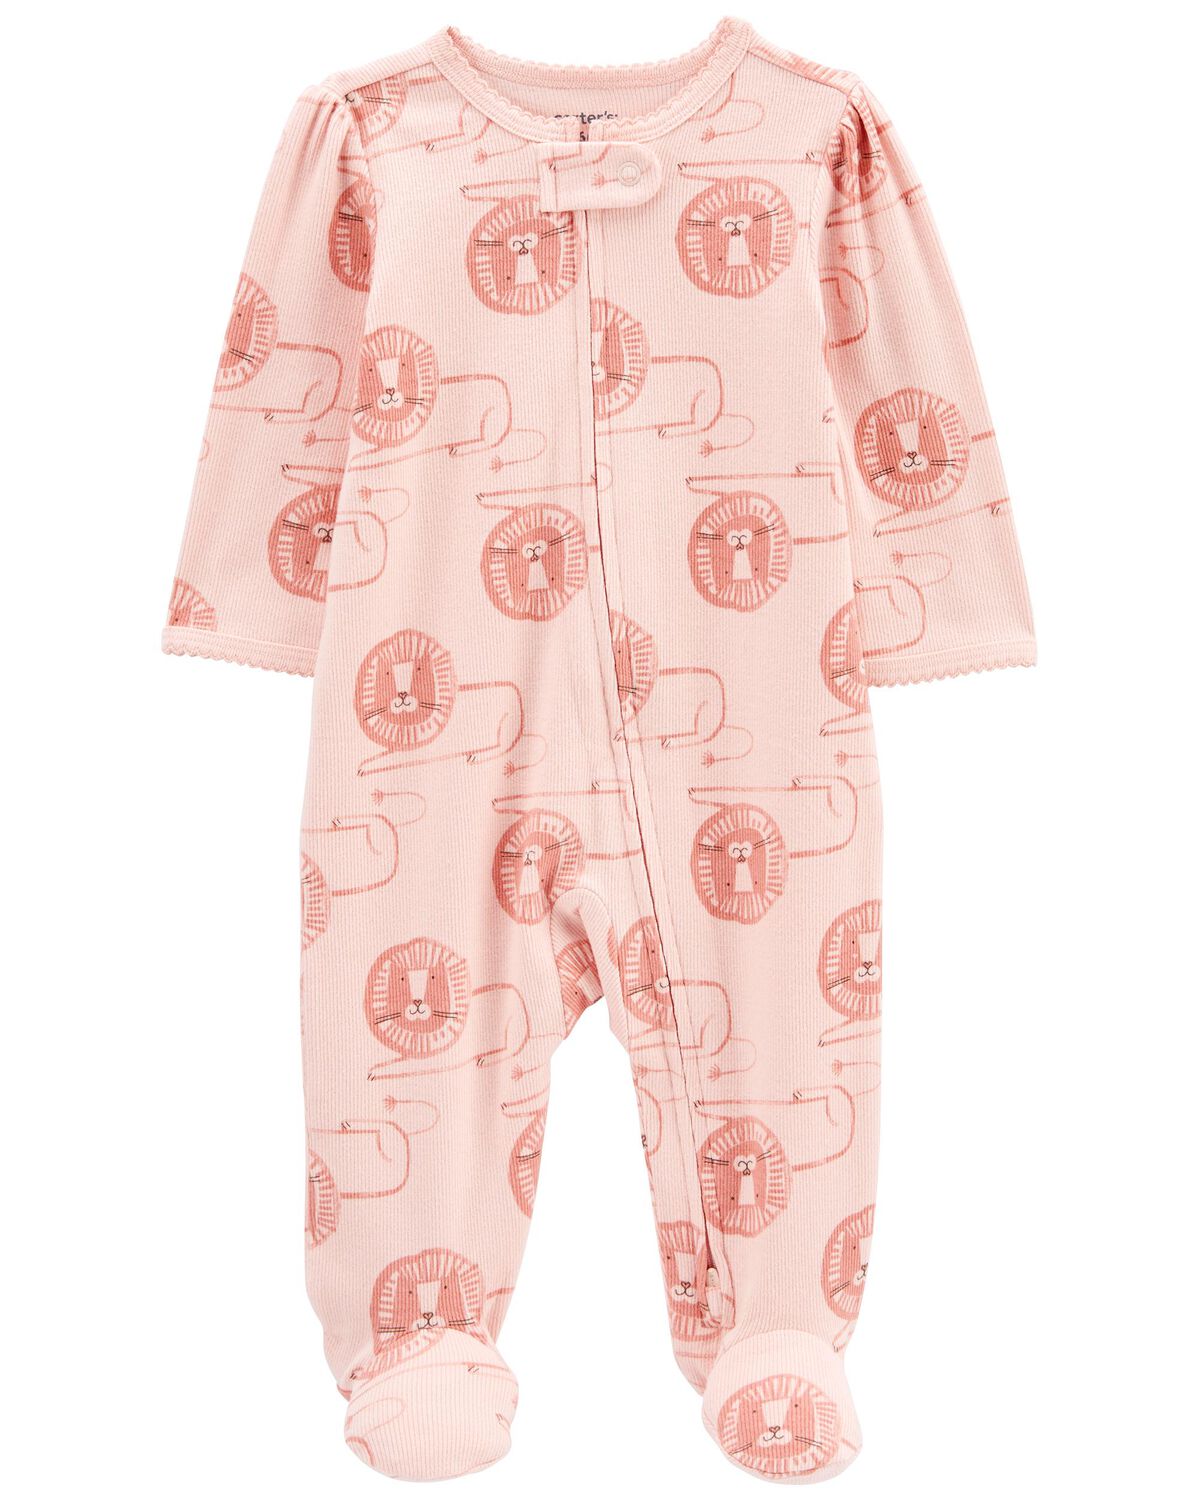 Baby Lion 2-Way Zip Cotton Blend Sleep & Play Pajamas